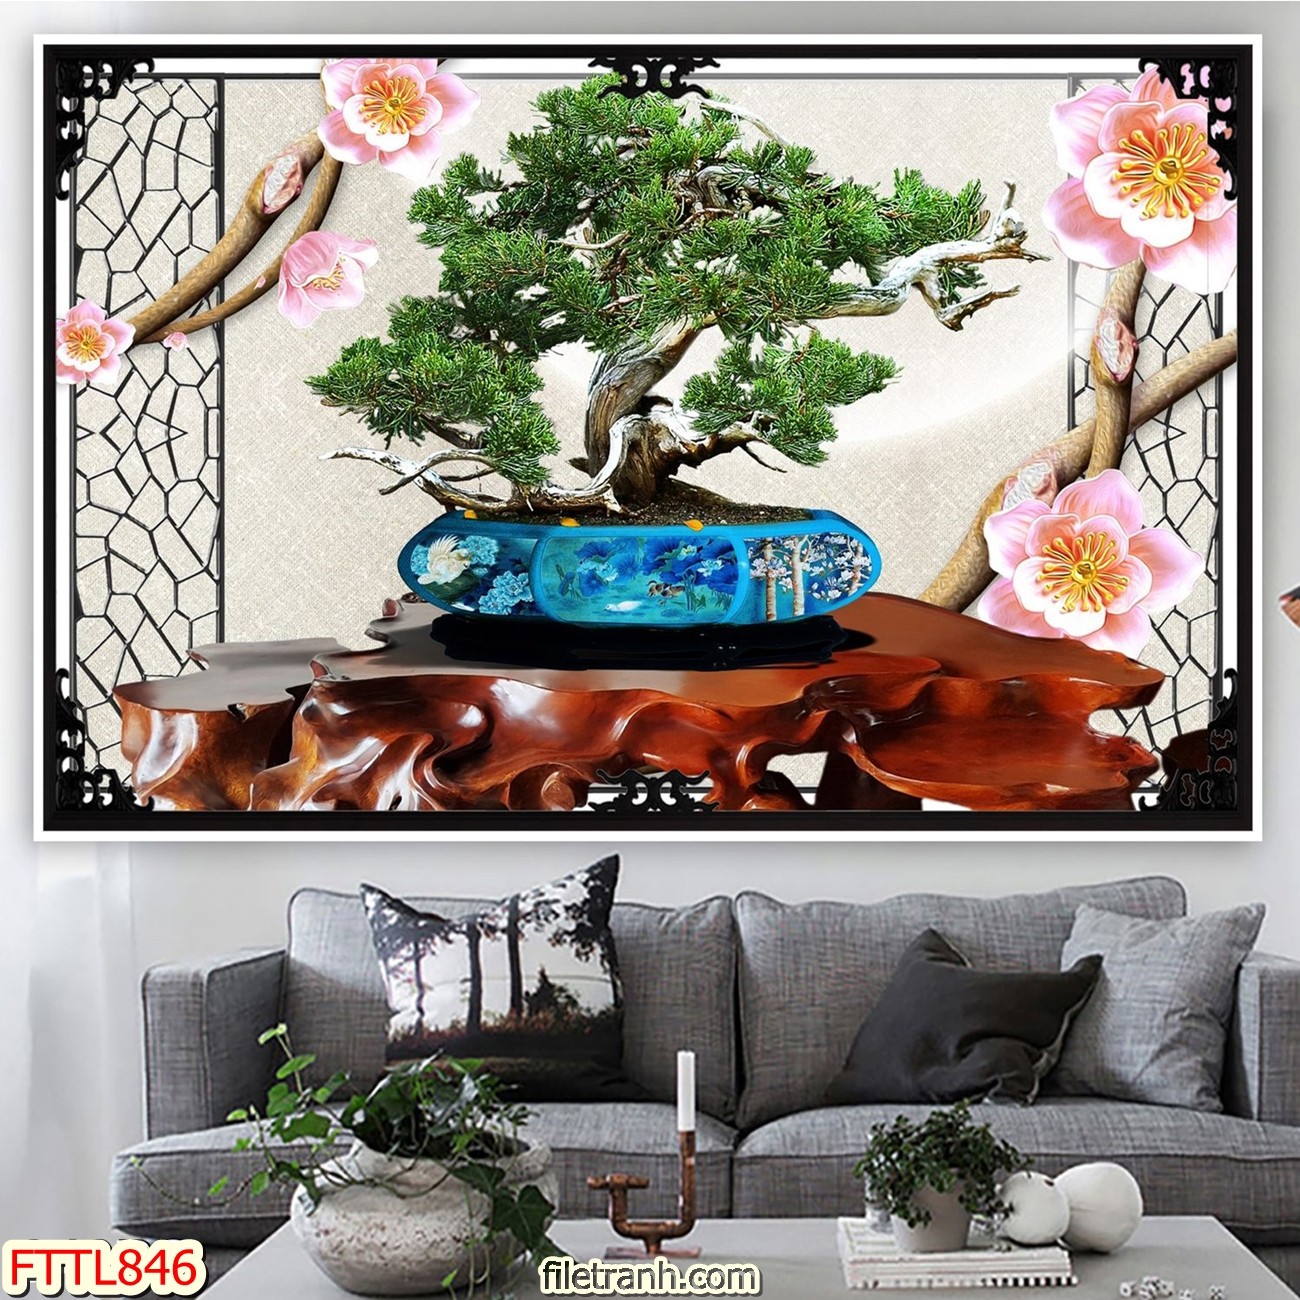 https://filetranh.com/file-tranh-chau-mai-bonsai/file-tranh-chau-mai-bonsai-fttl846.html